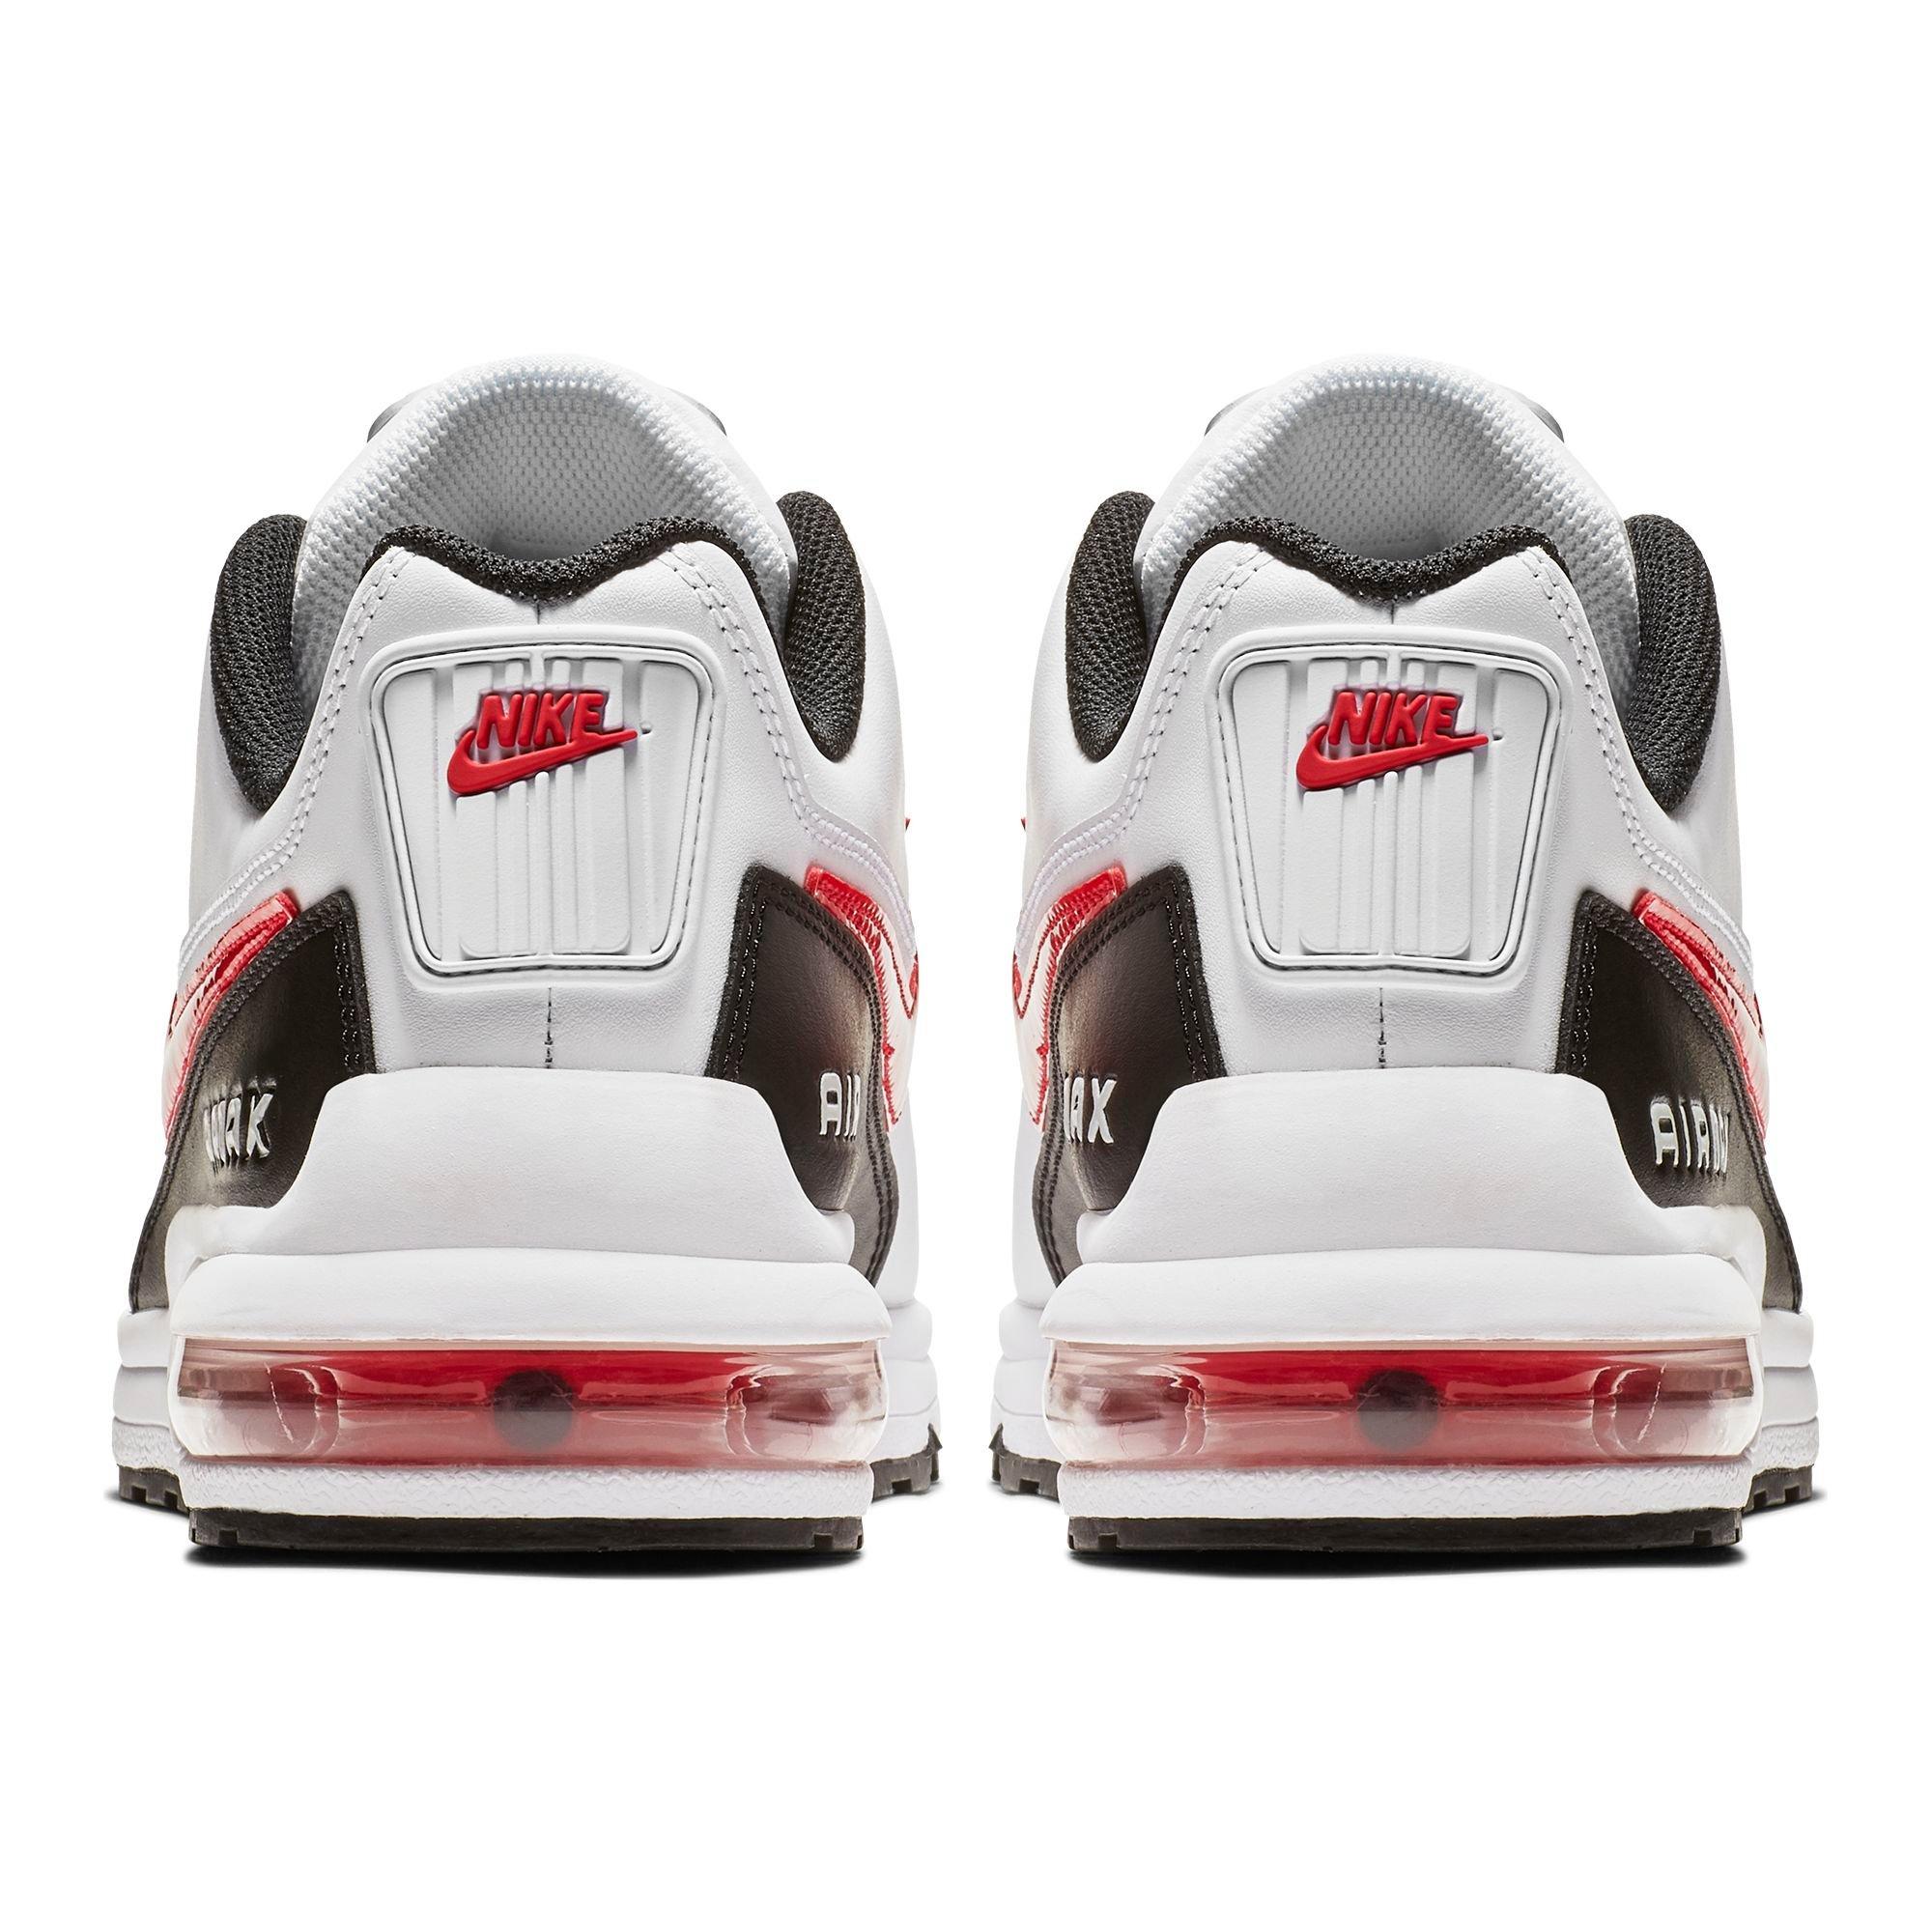 Nike Air Max 3 "White/University Red/Black" Men's Shoe